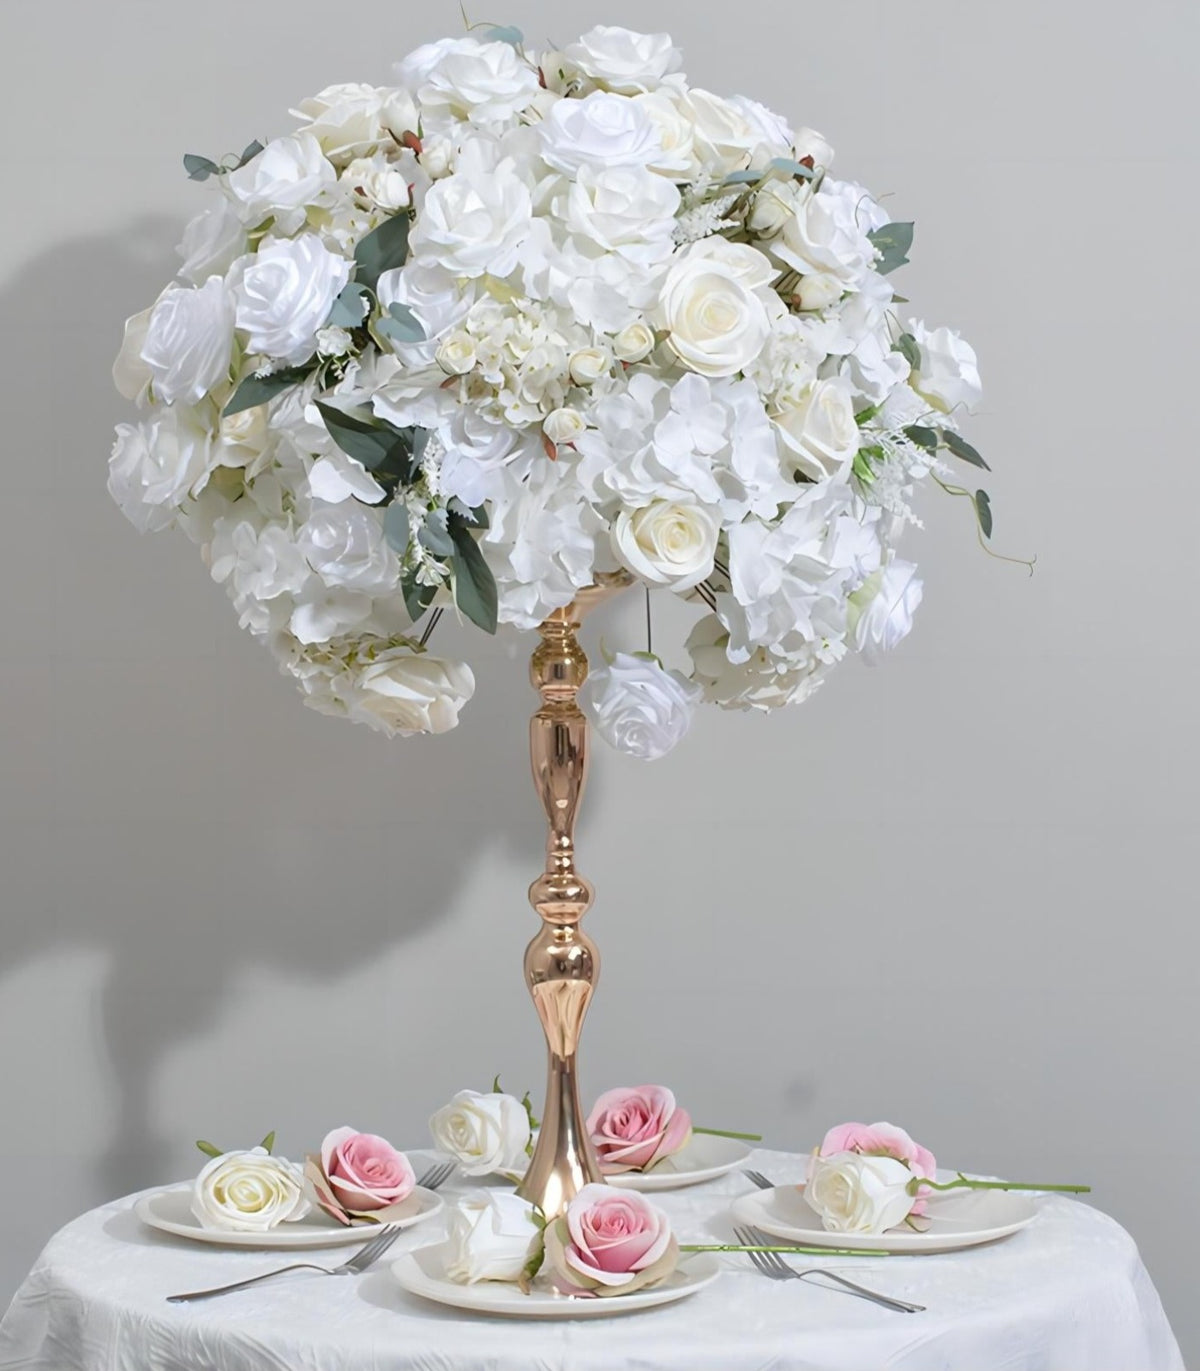 60cm White Hydrangea Rose Artificial Flower Wedding Party Birthday Backdrop Decor CH7523